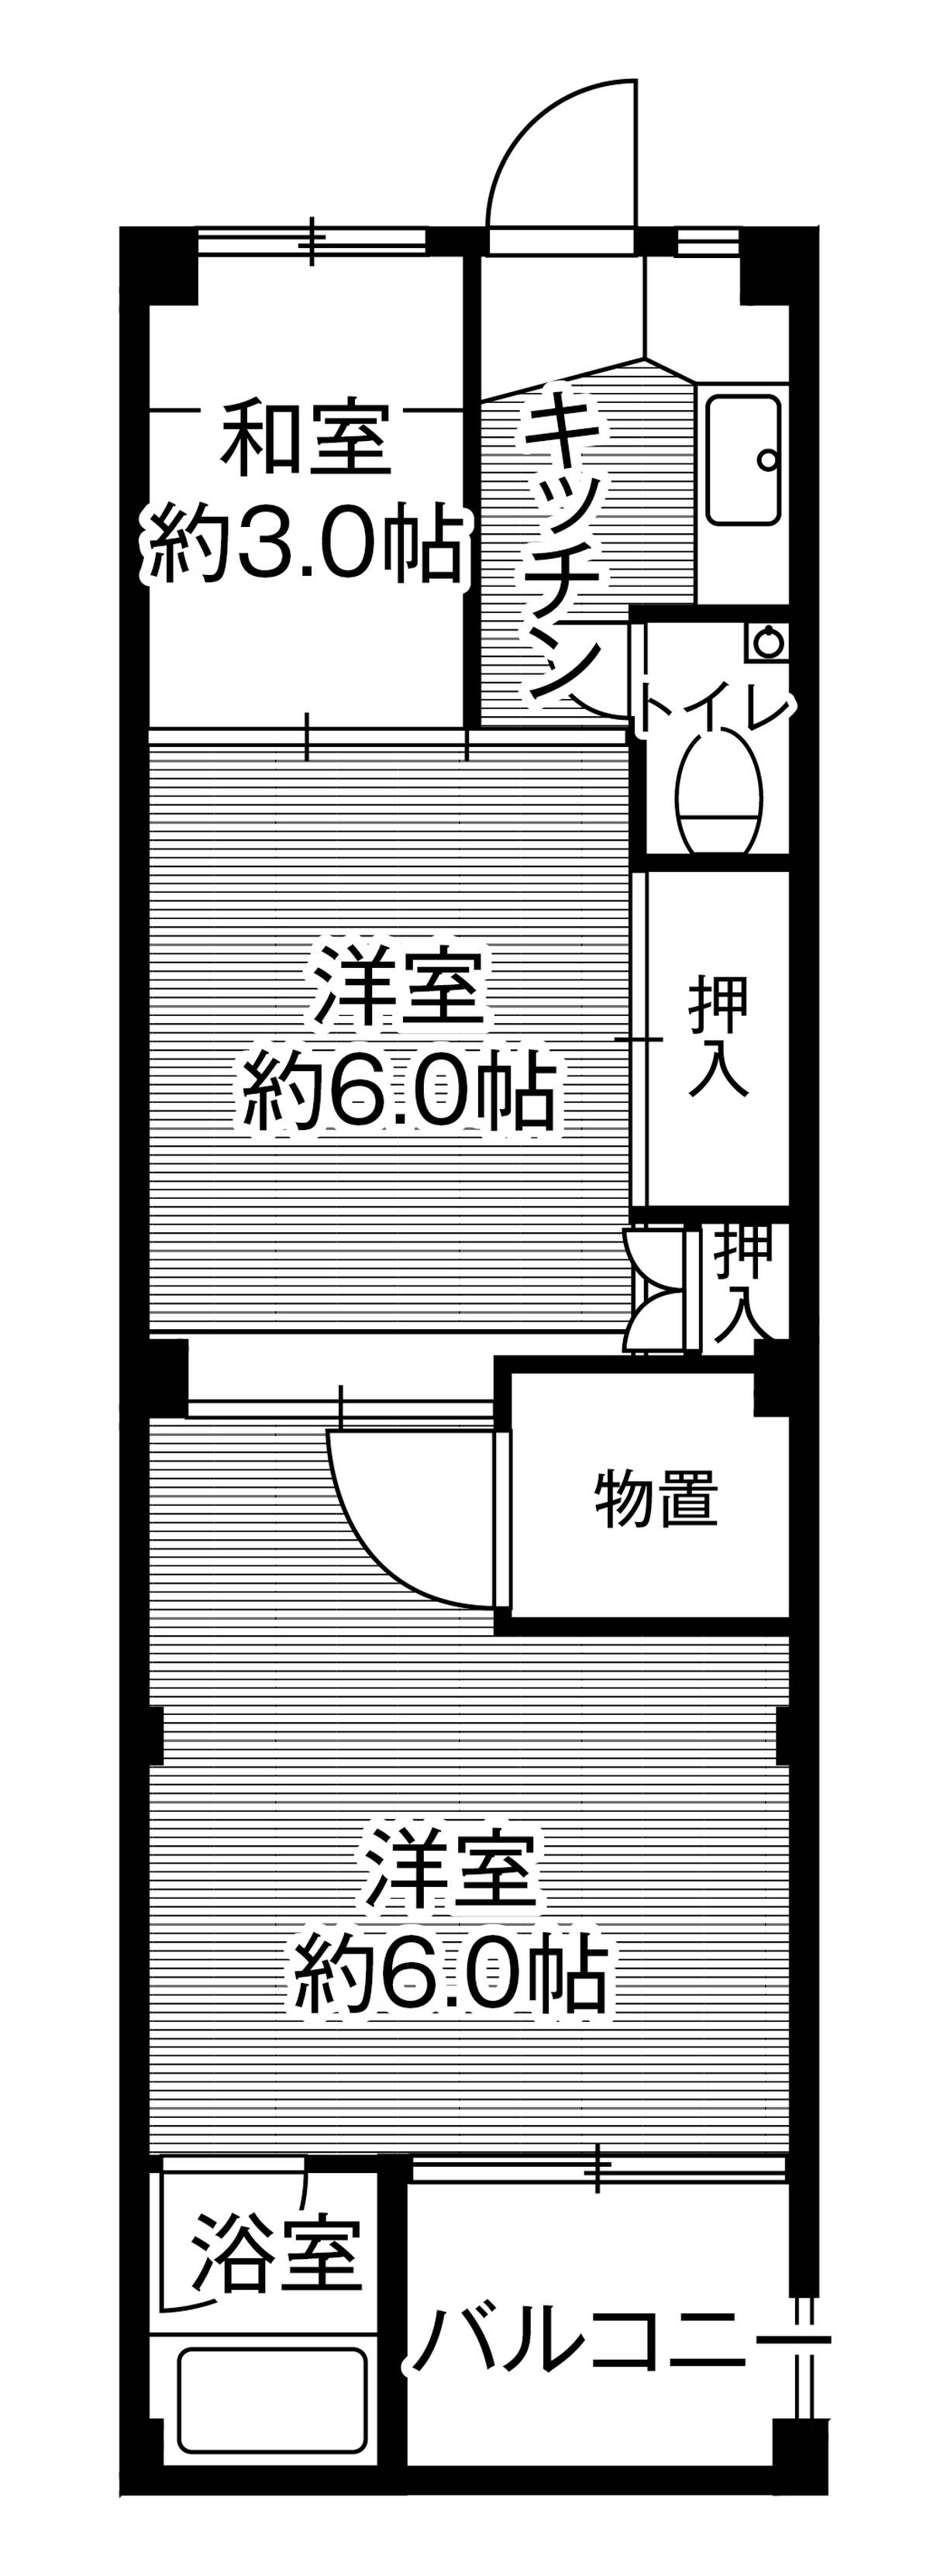 2DK floorplan of Village House Shimosarachi in Hatsukaichi-shi